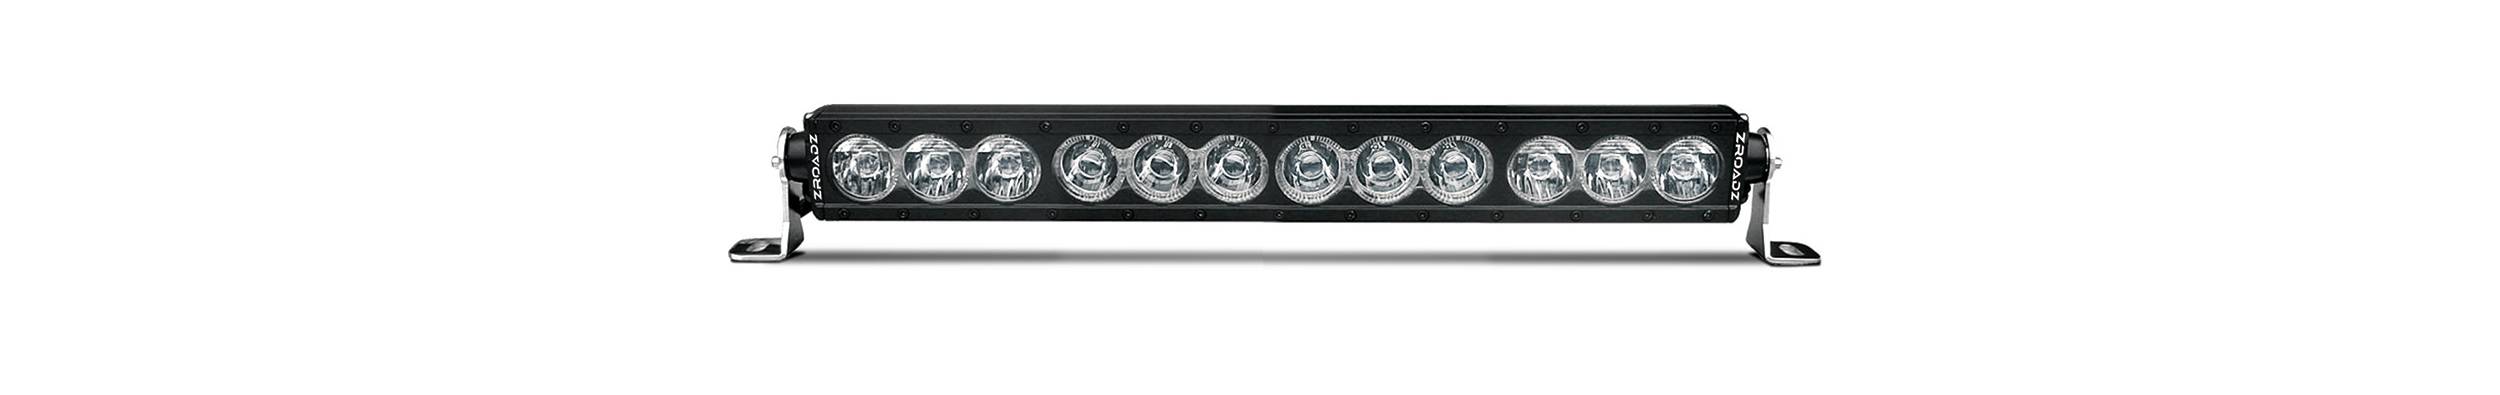 ZROADZ OFF ROAD PRODUCTS - 20 Inch LED Straight Single Row Tri Beam Light Bar - PN #Z30NTM01-20